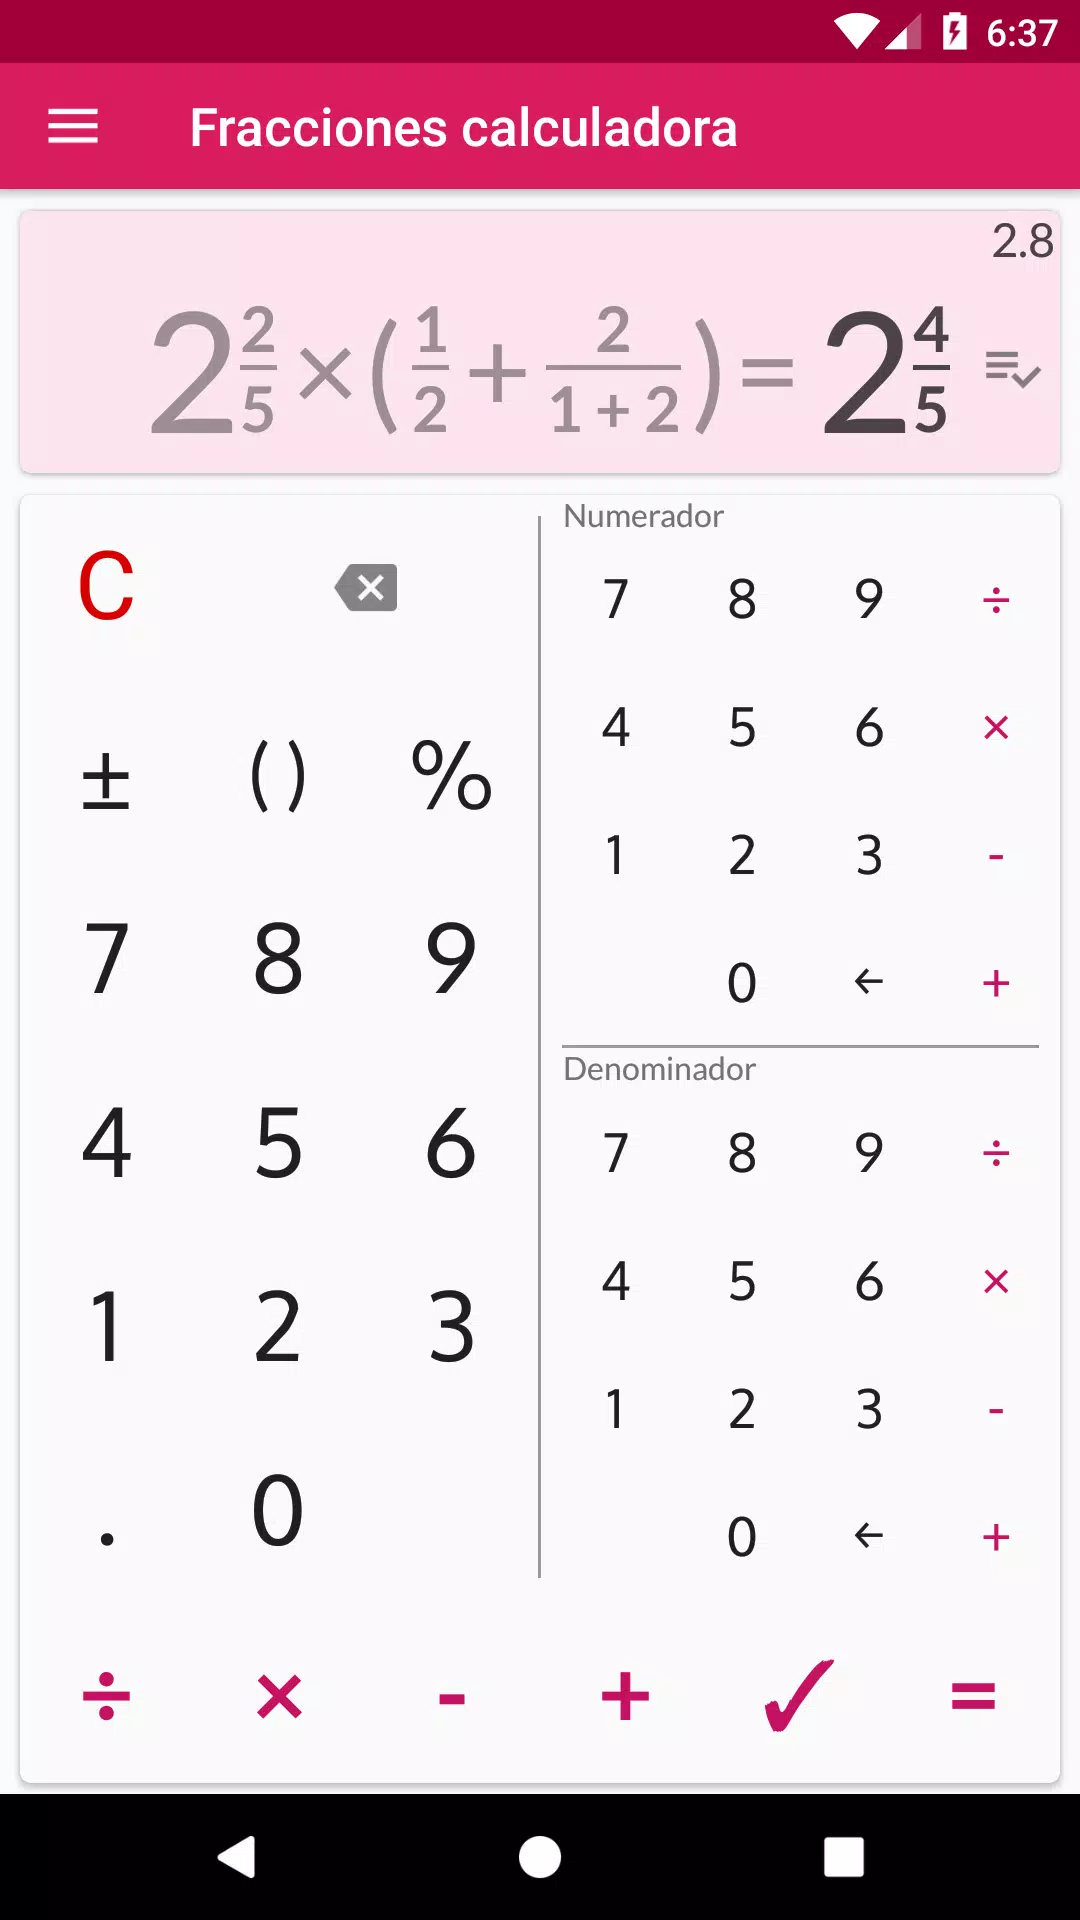 Calculadora de fracciones for Android - APK Download